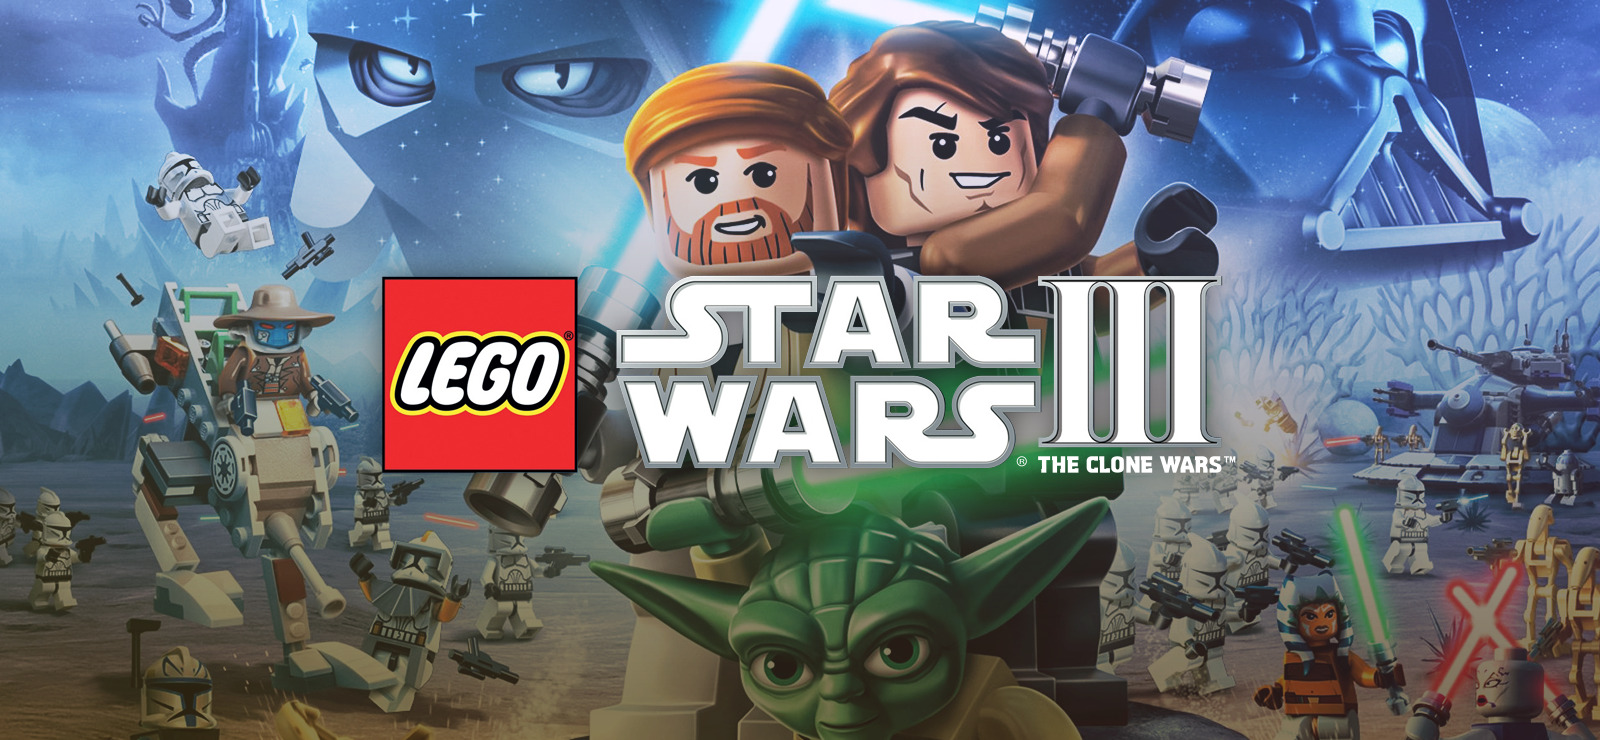 LEGO Star Wars III The Clone Wars GOG